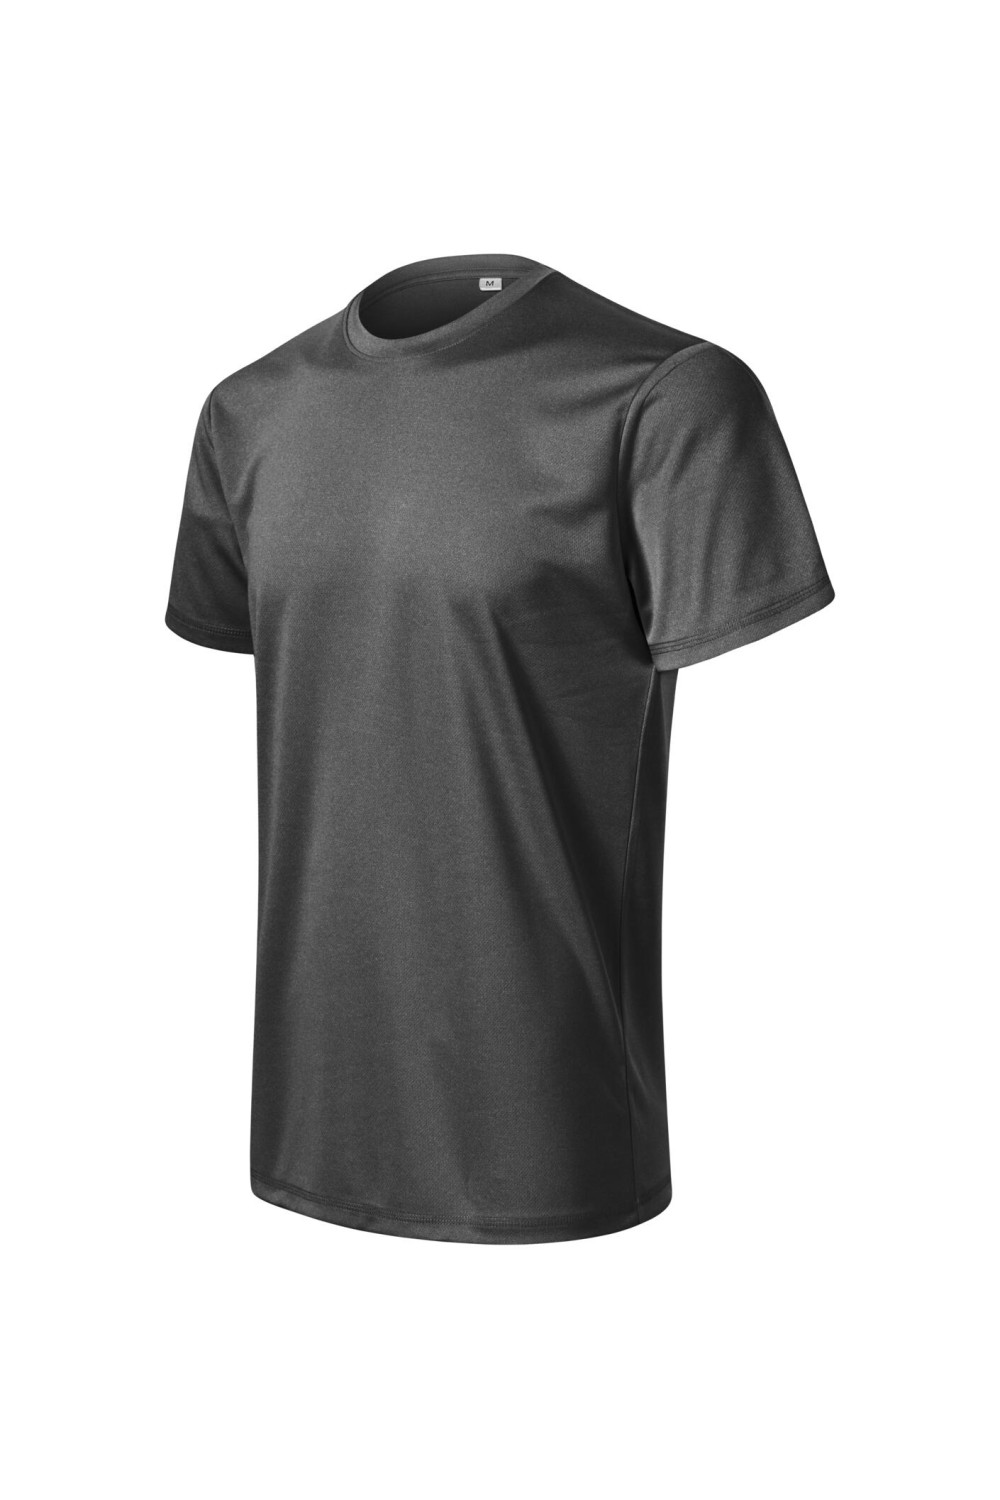 CHANCE (GRS) 810 MALFINI ADLER Koszulka męska t-shirt sportowy czarny melanż